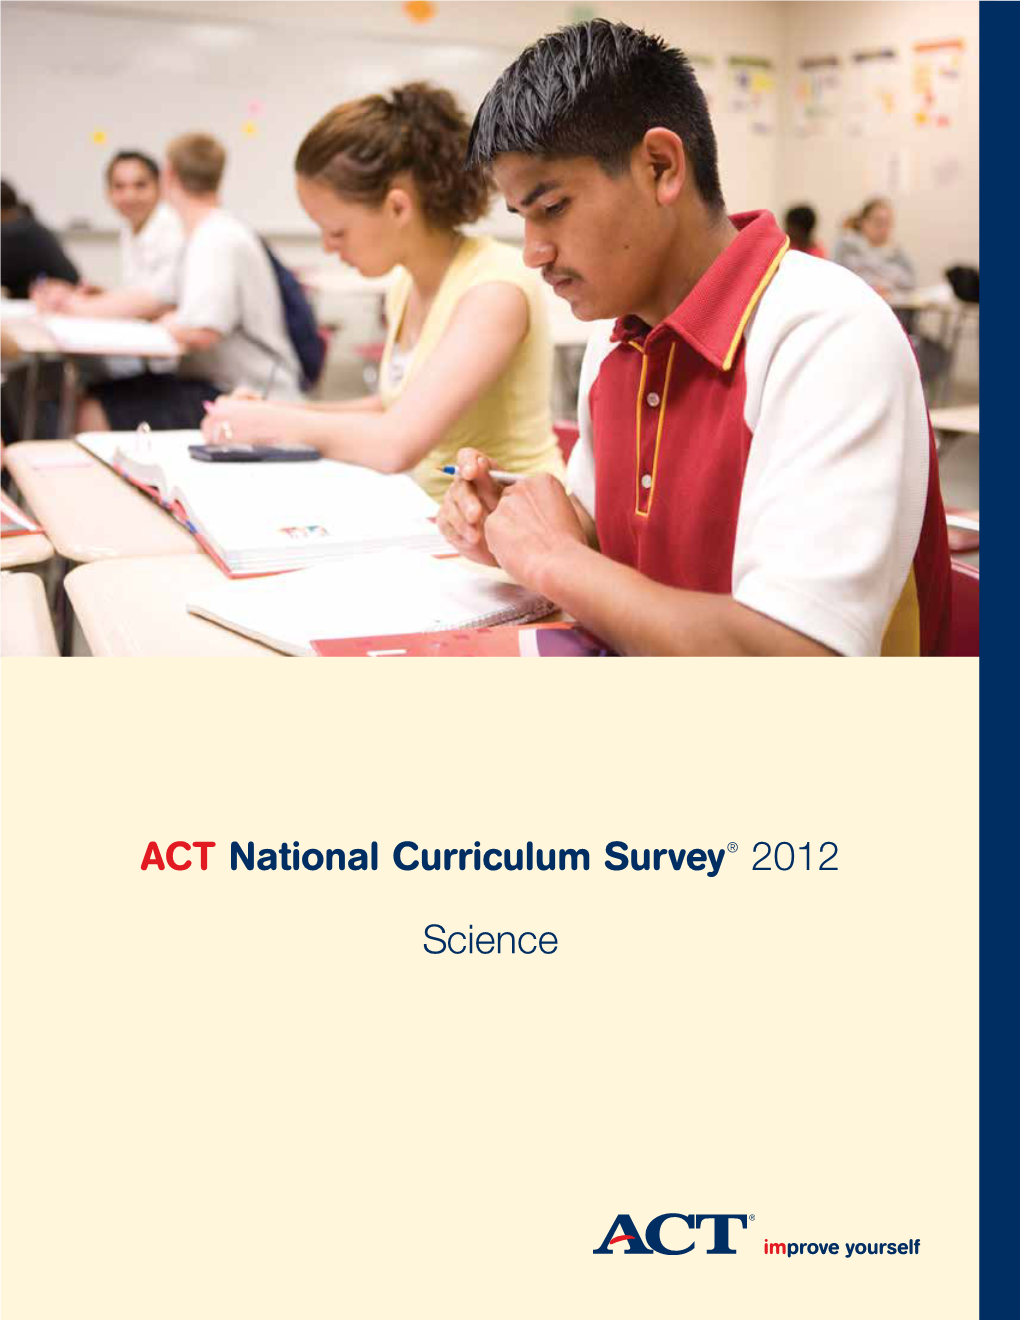 ACT National Curriculum Survey 2012: Science